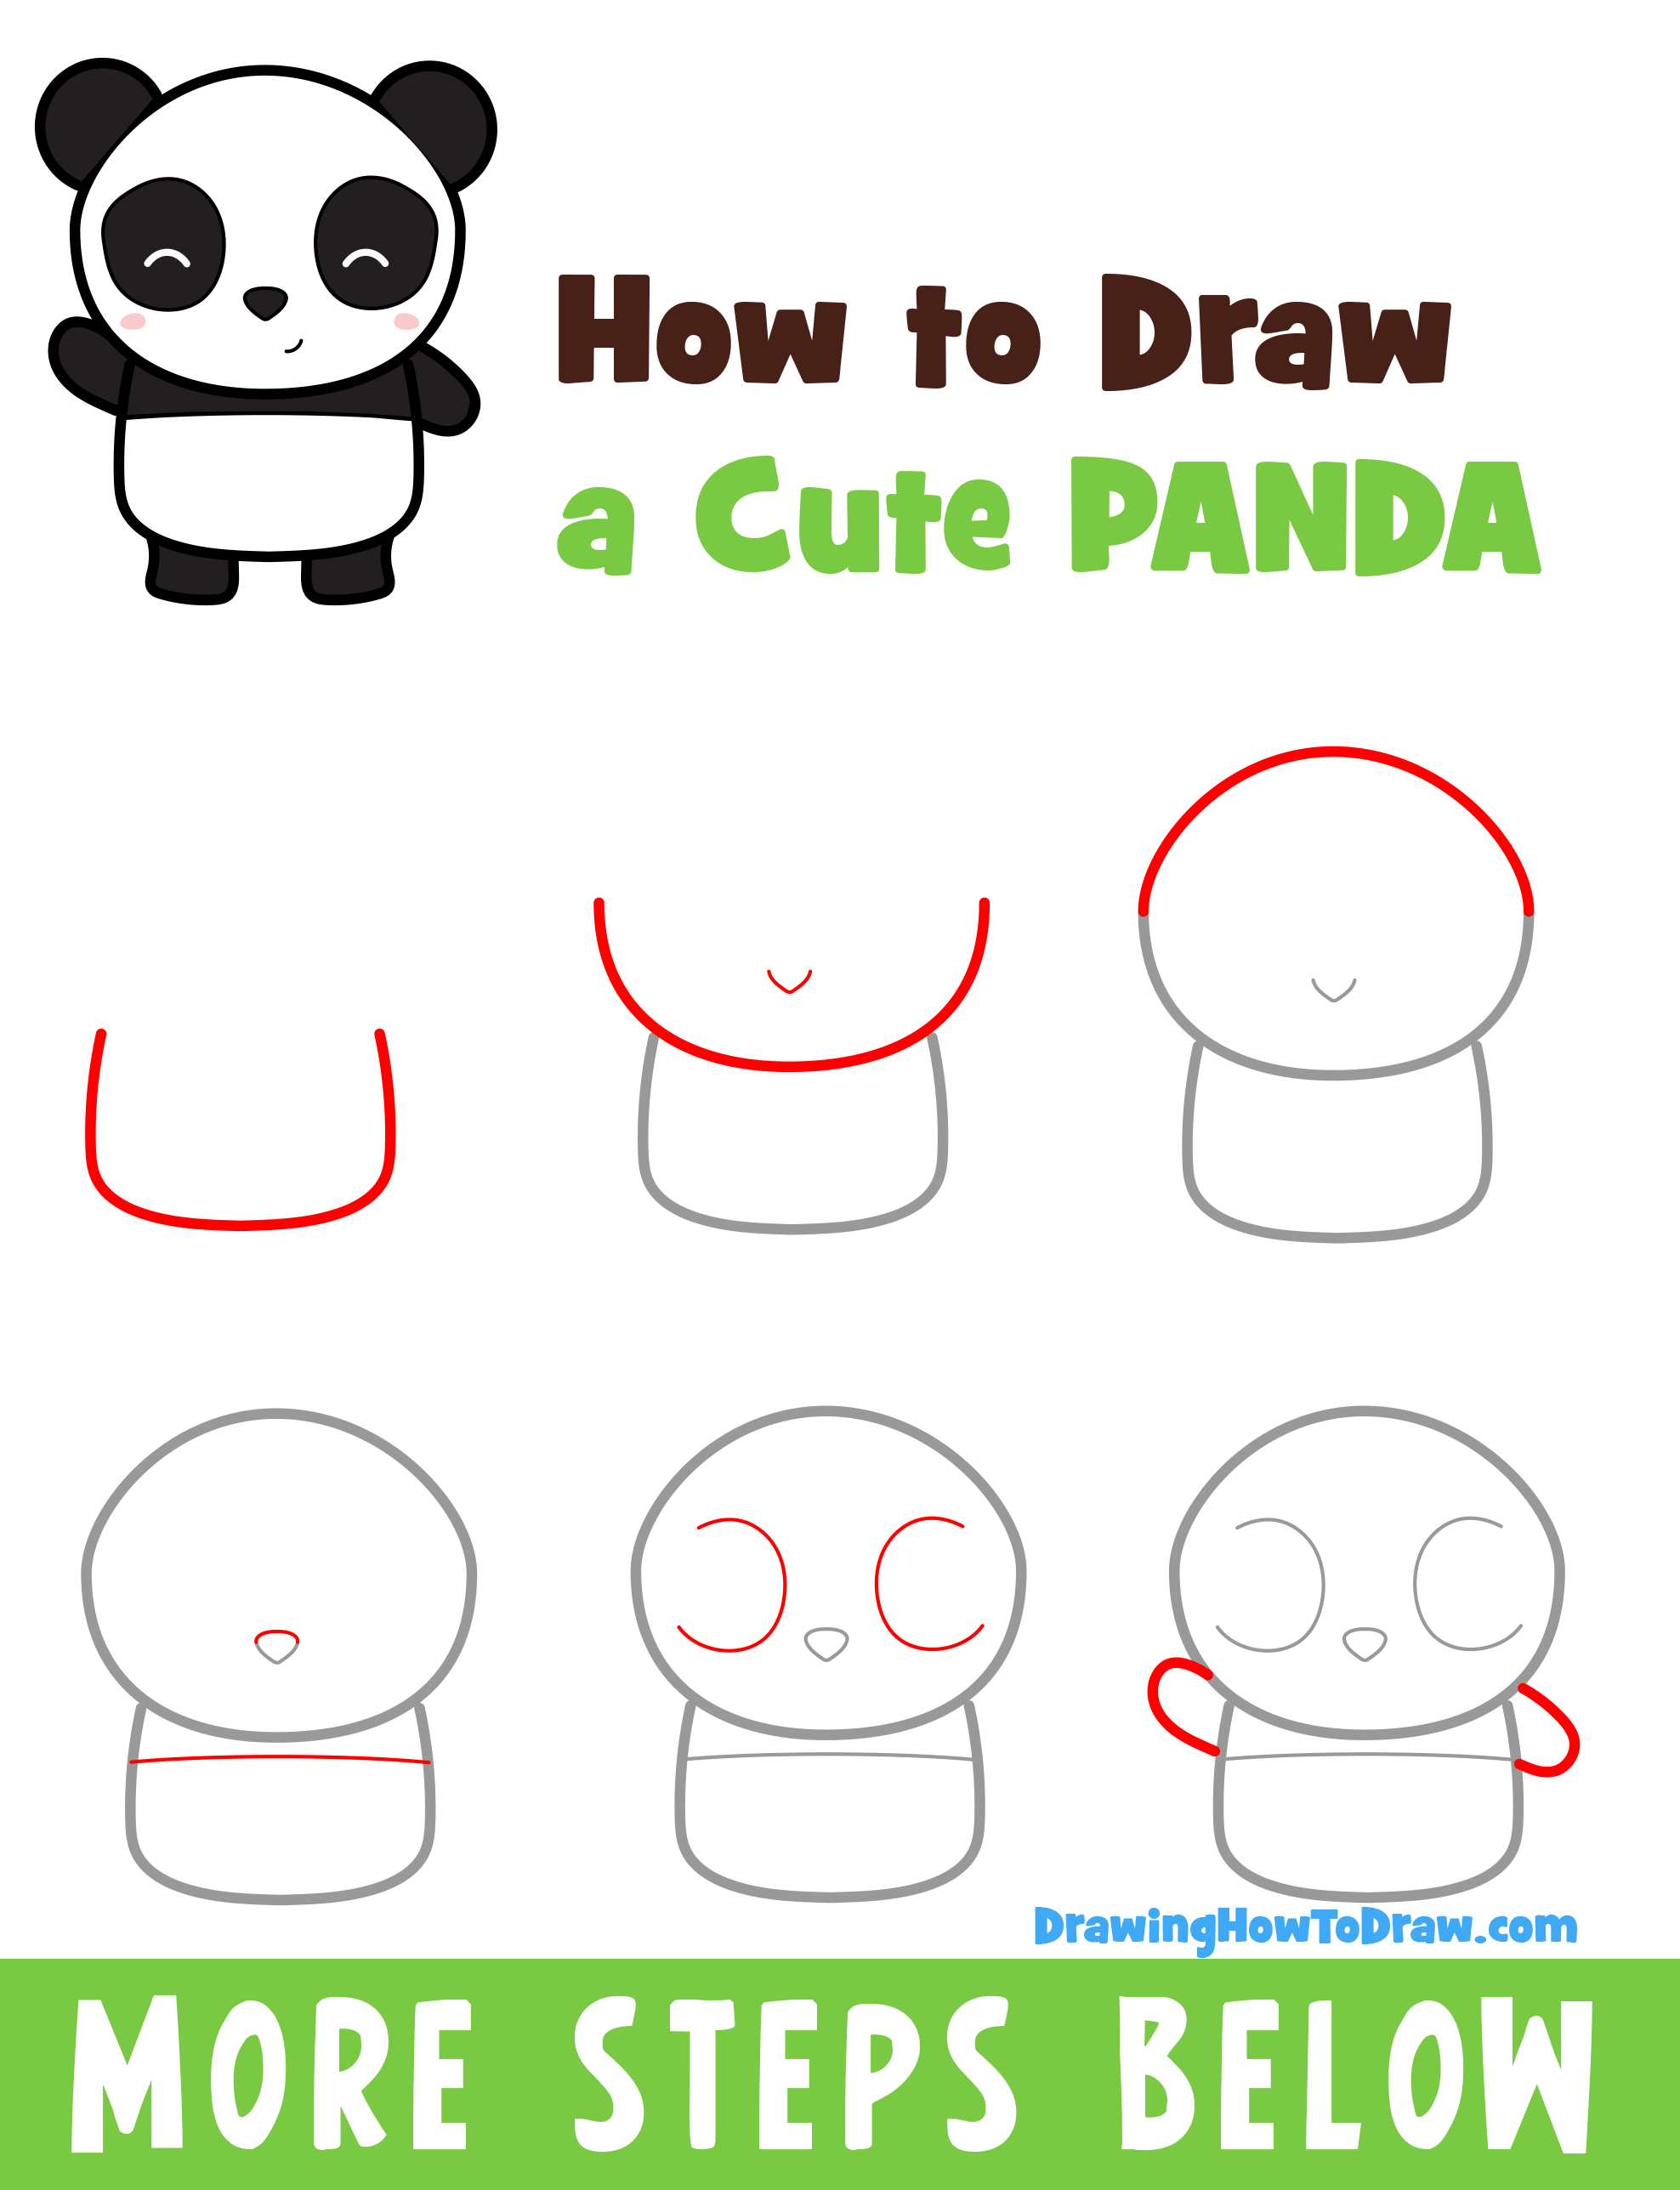 Learn How to Draw Cute Cartoon Panda Bear (kawaii) Easy Step-by-Step Drawing Tutorial for Kids